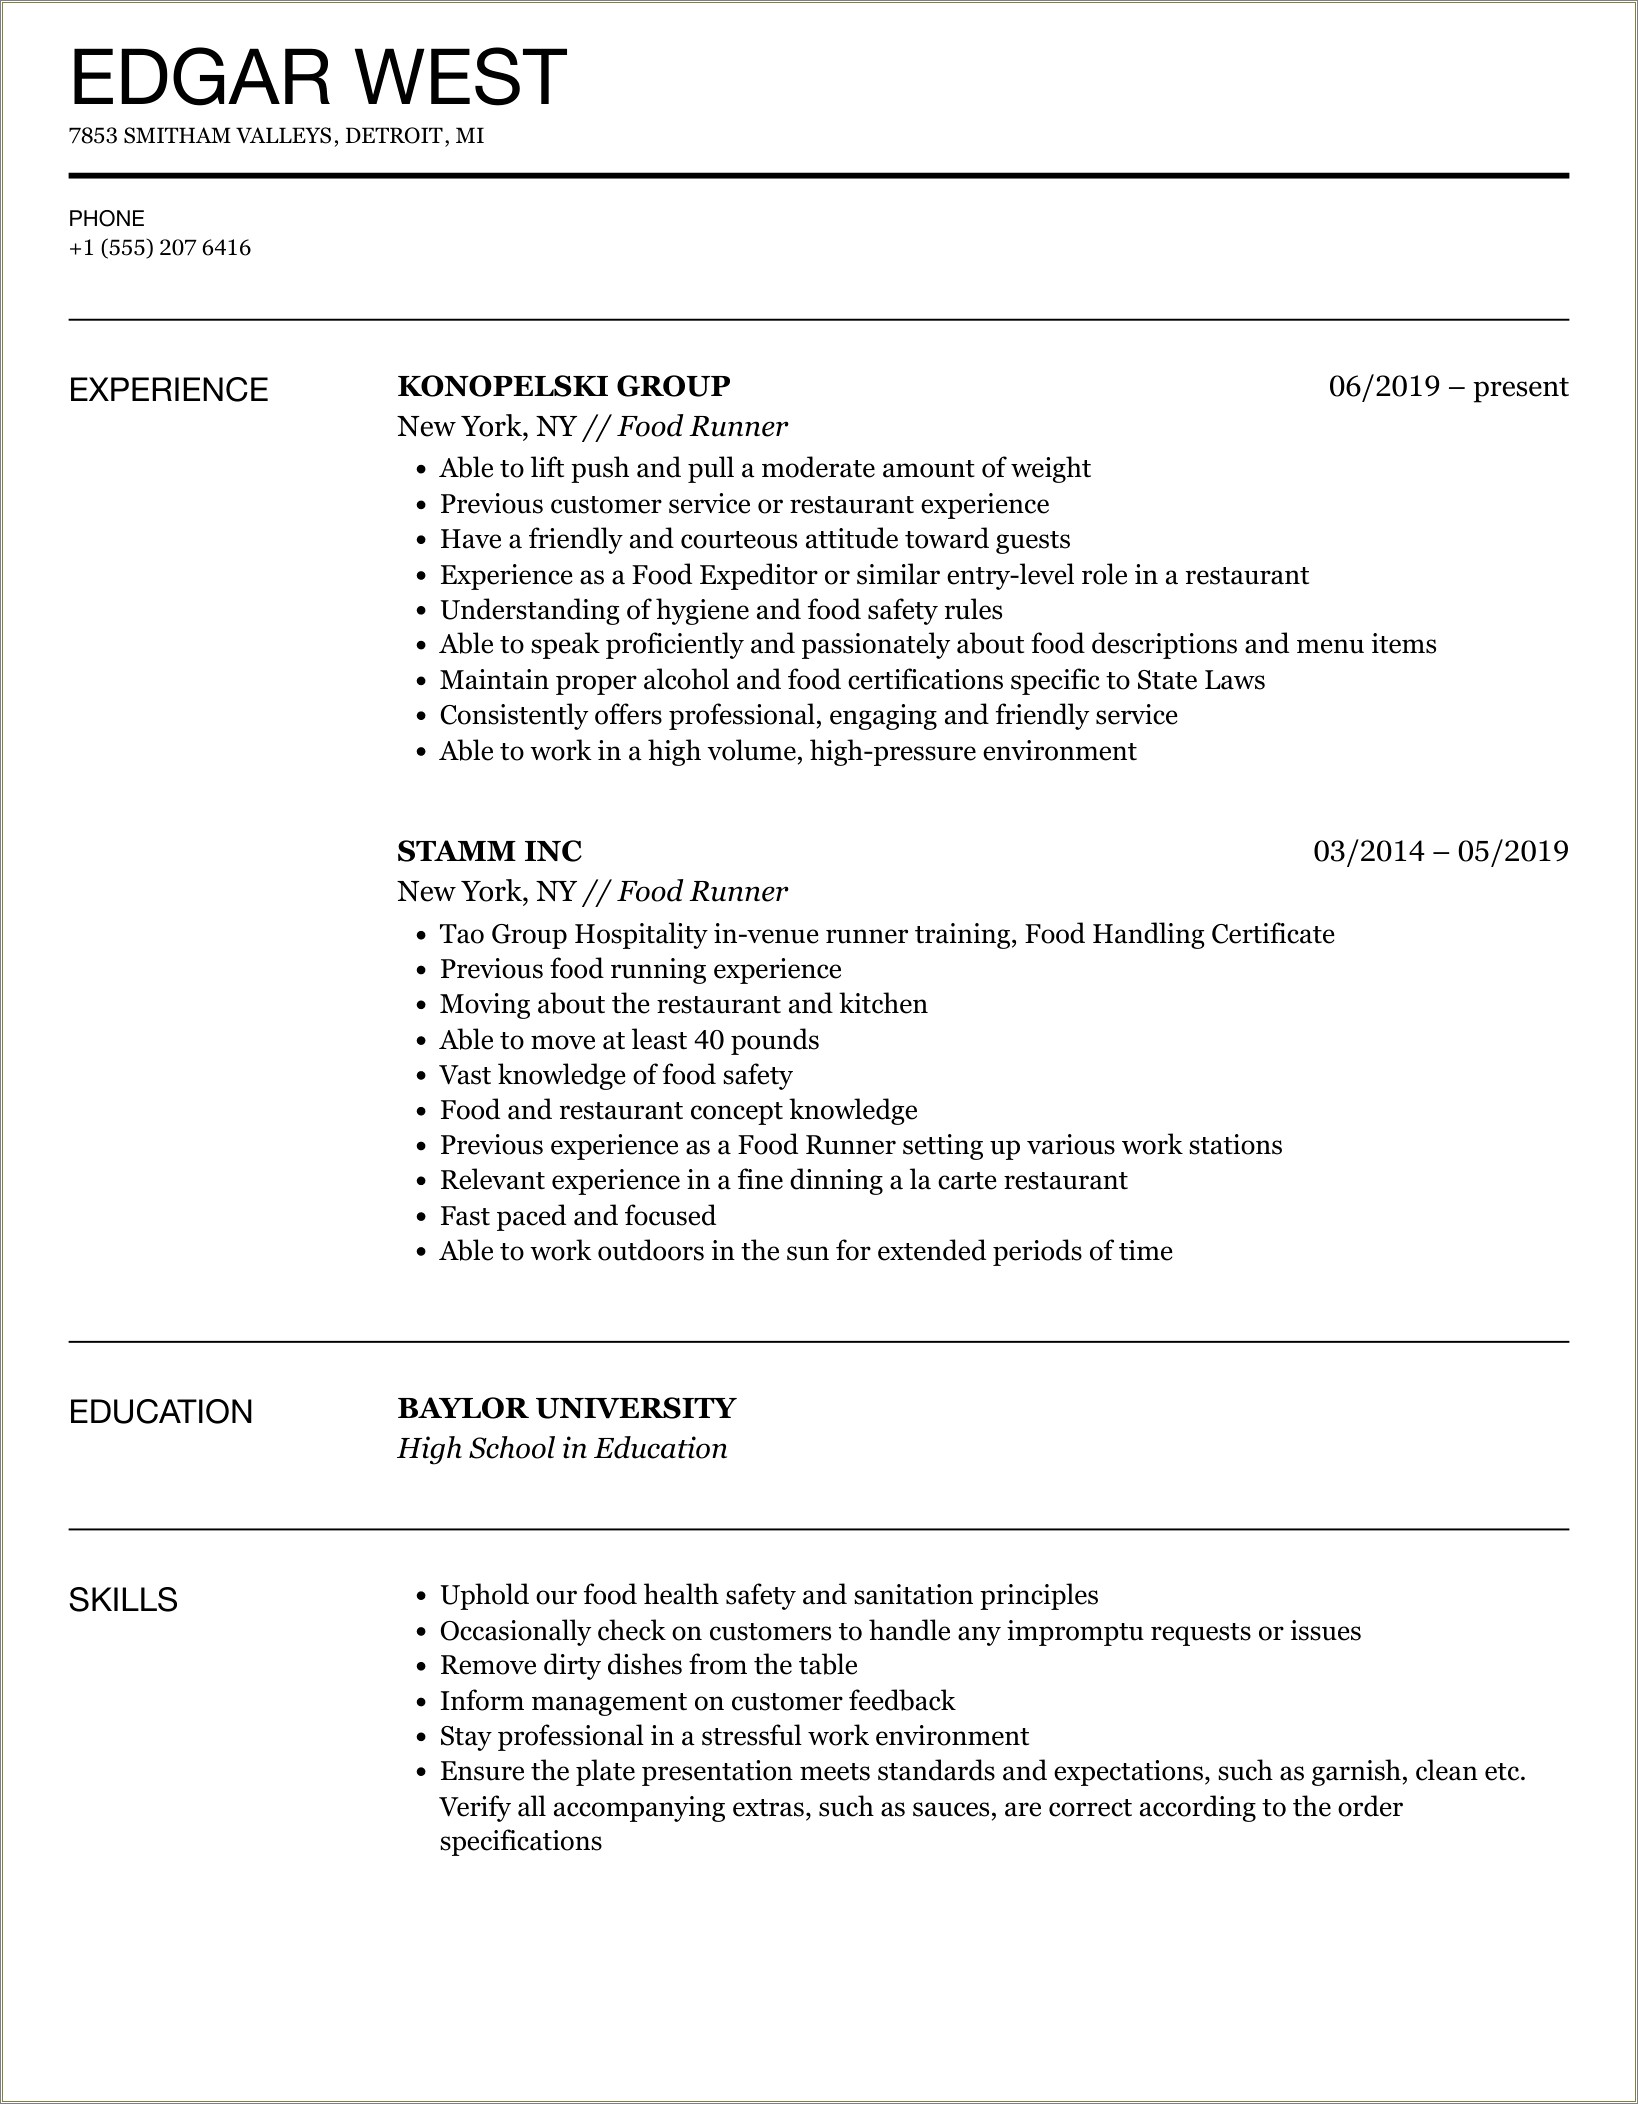 Job Description For Busser On Resume